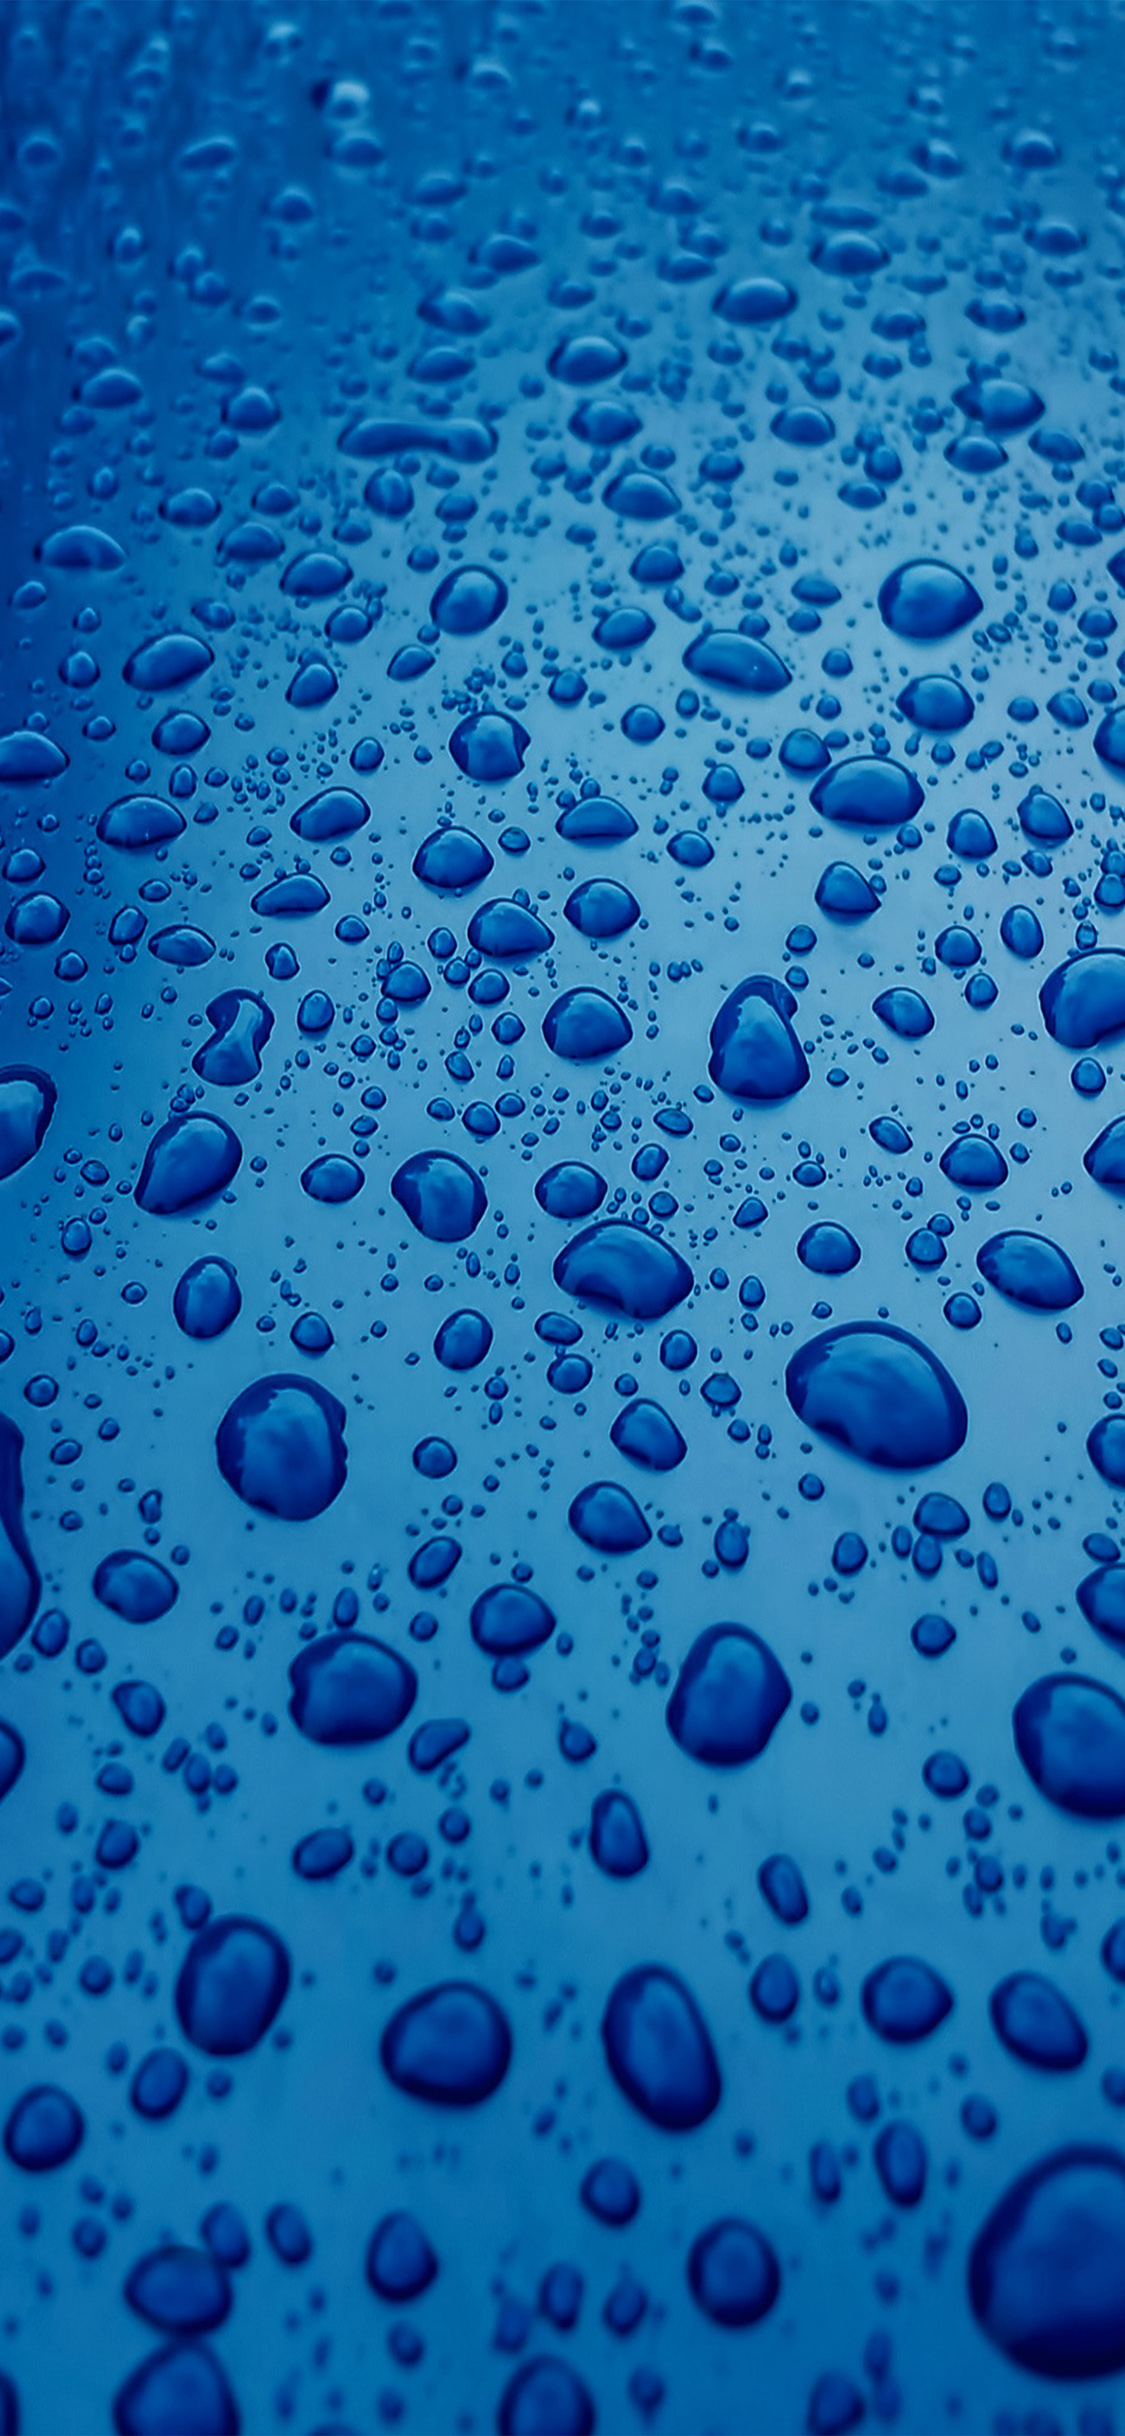 iPhone X wallpaper. rain drop nature blue sad pattern